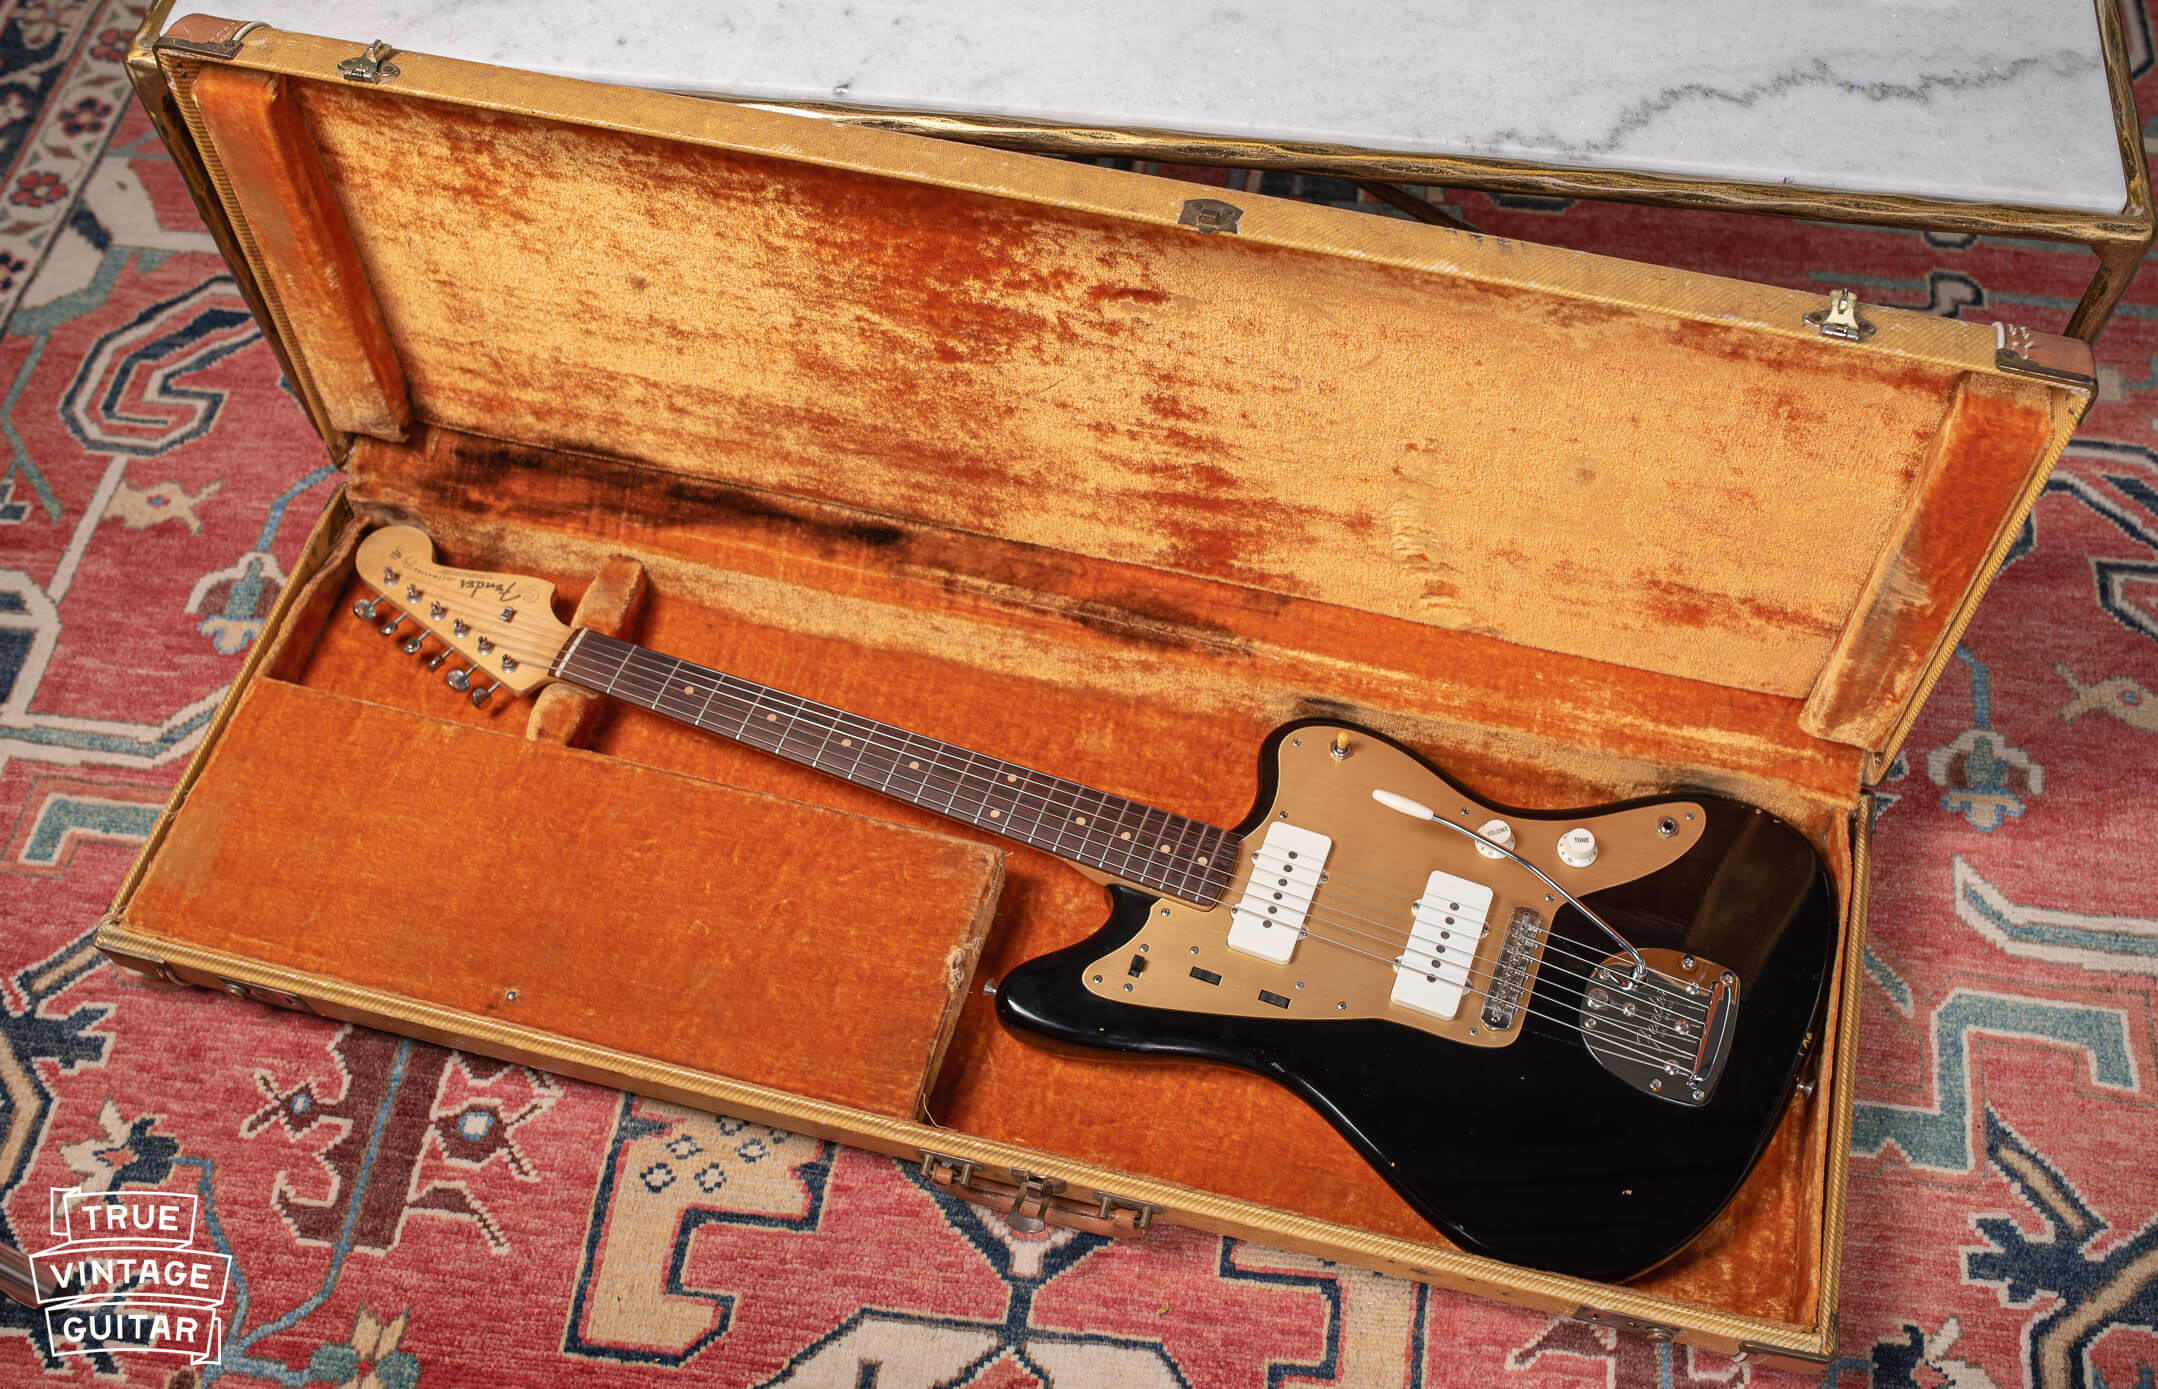 1959 Fender Jazzmaster guitar in Black finish with gold pickguard